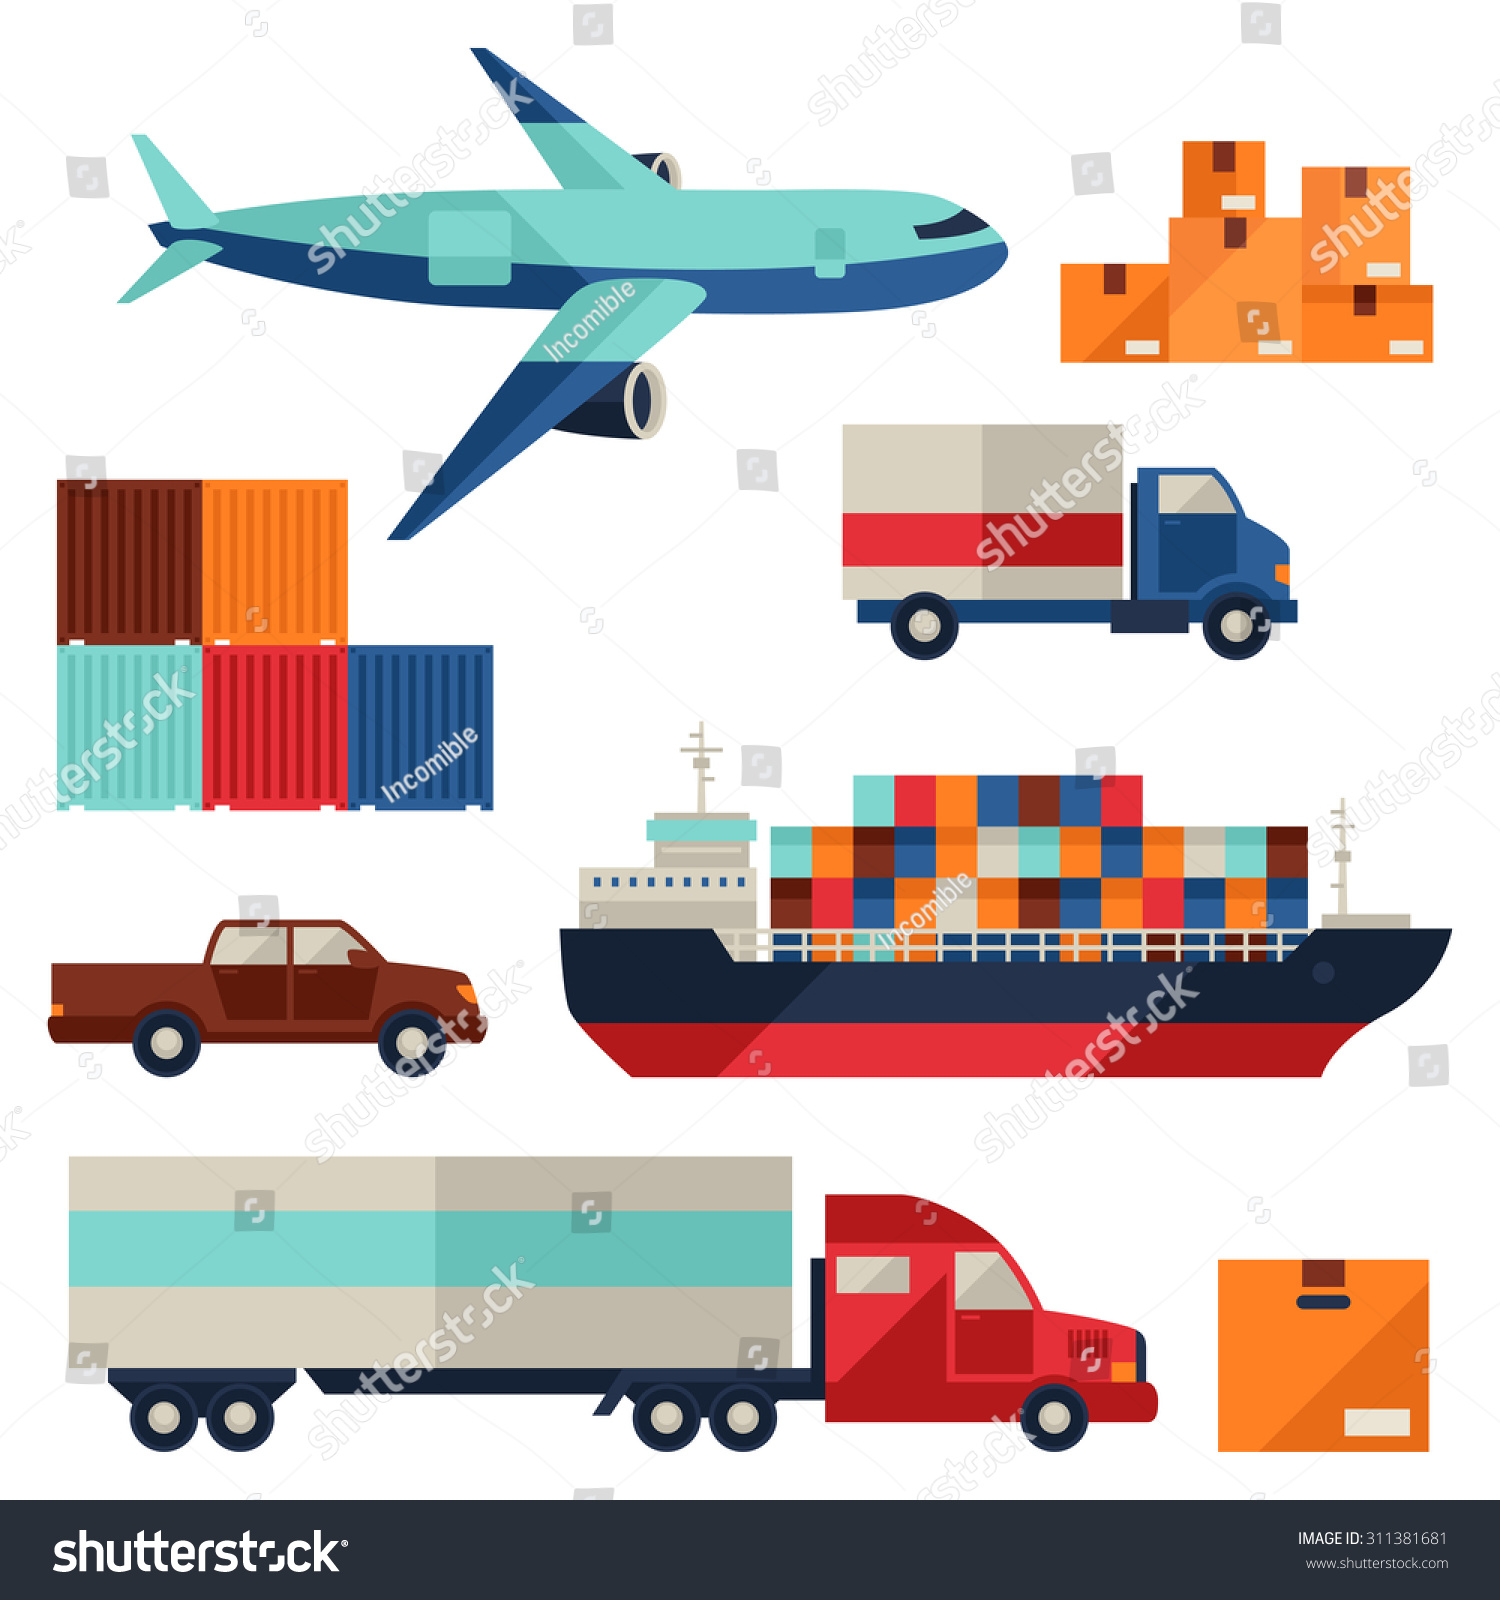 Edit Vectors Free Online - Freight cargo | Shutterstock Editor